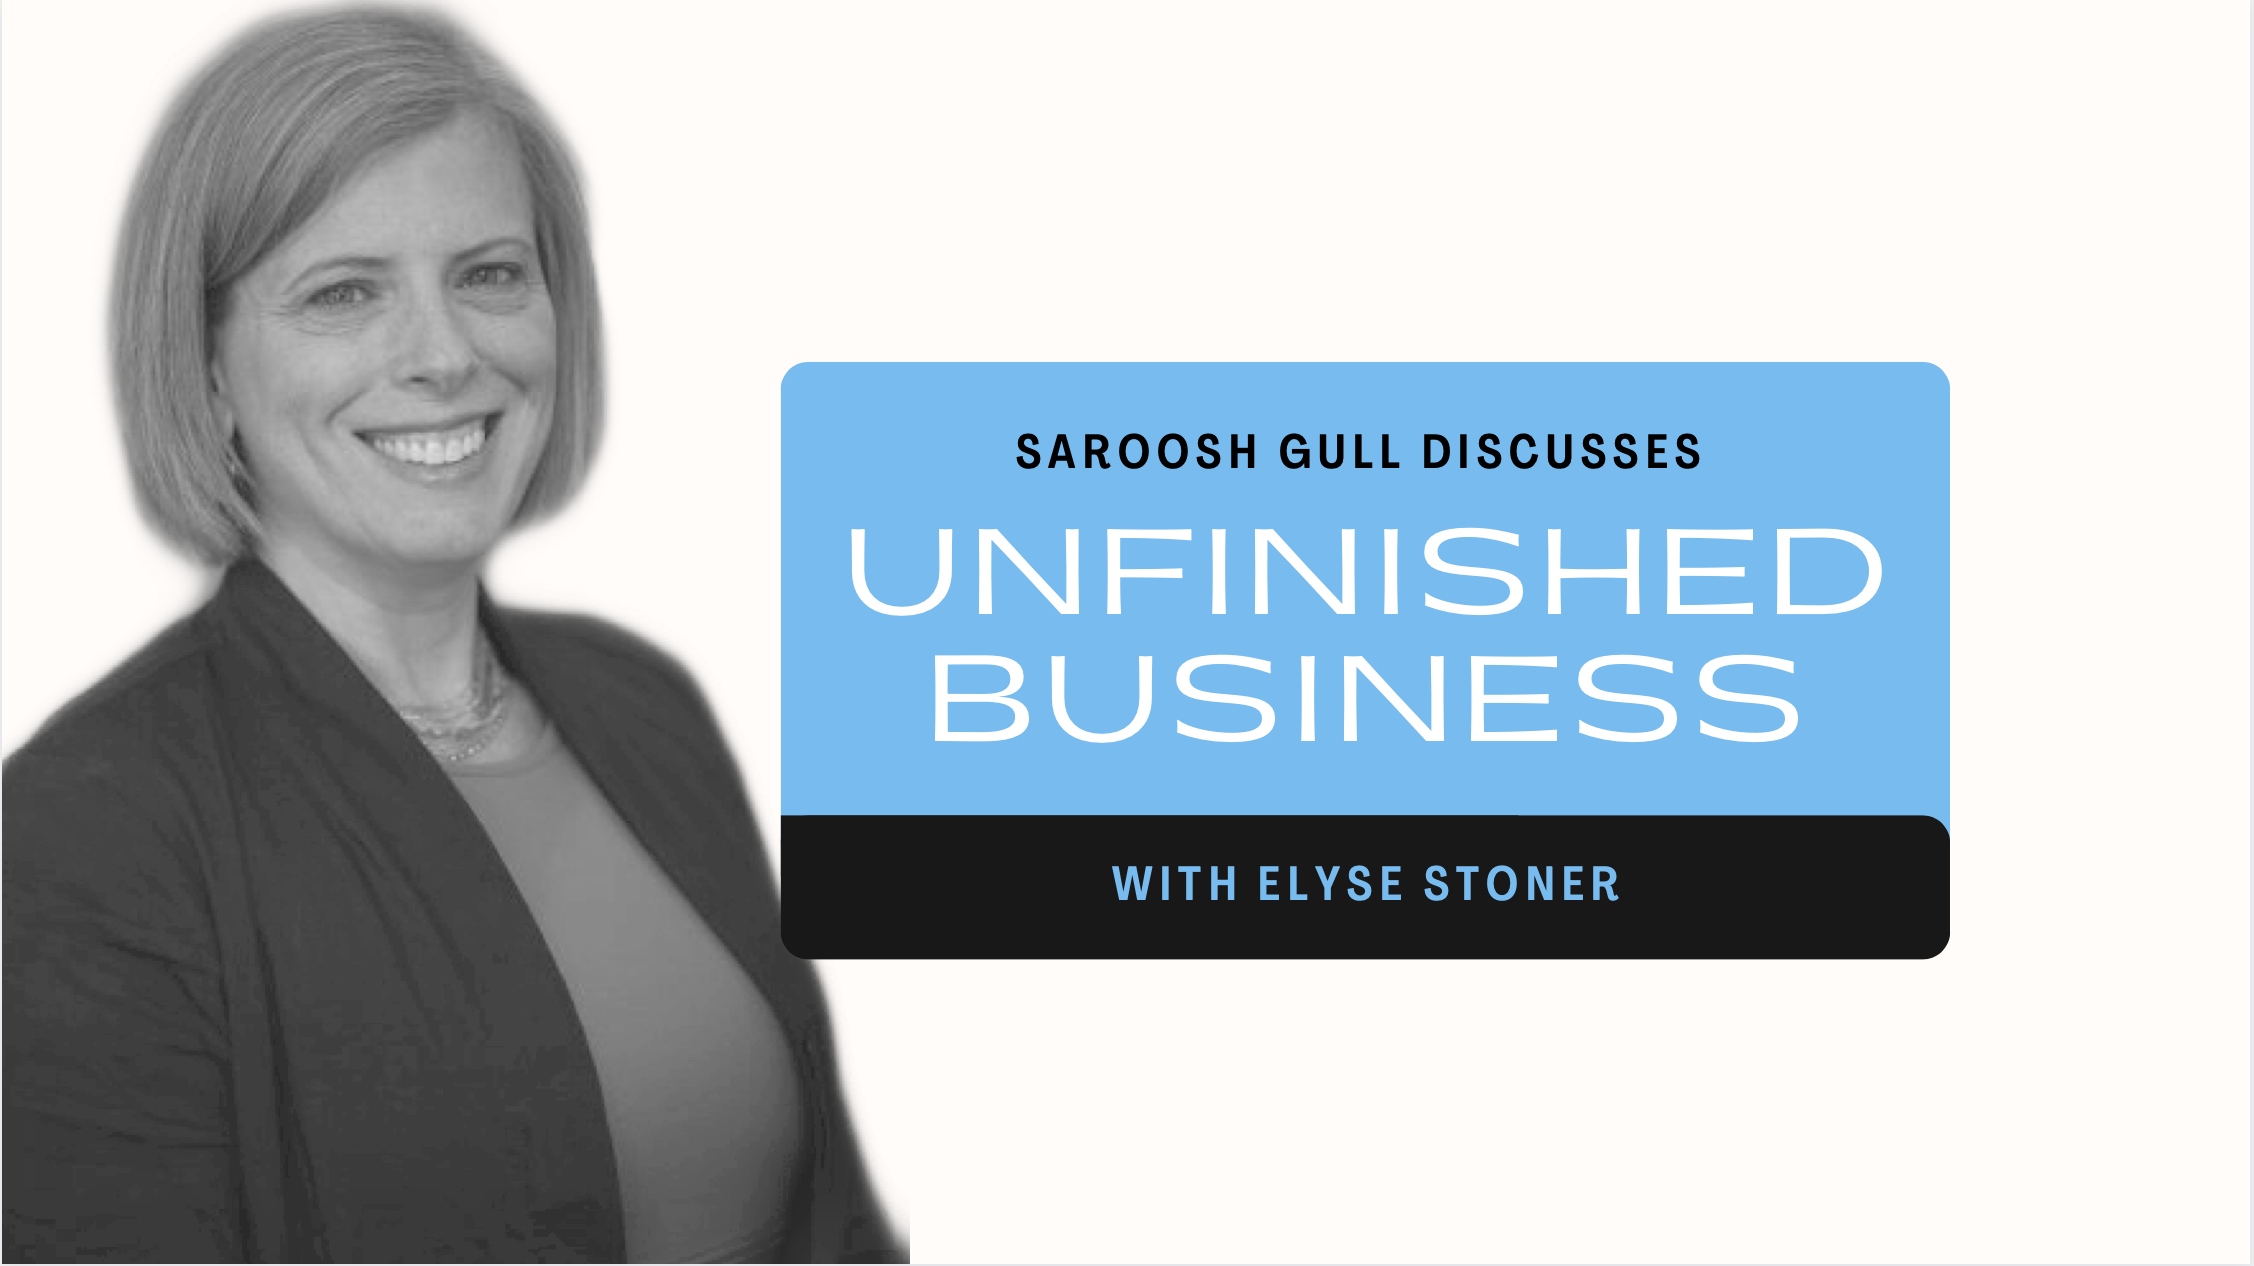 UNFINISHED BUSINESS - with Elyse Stoner